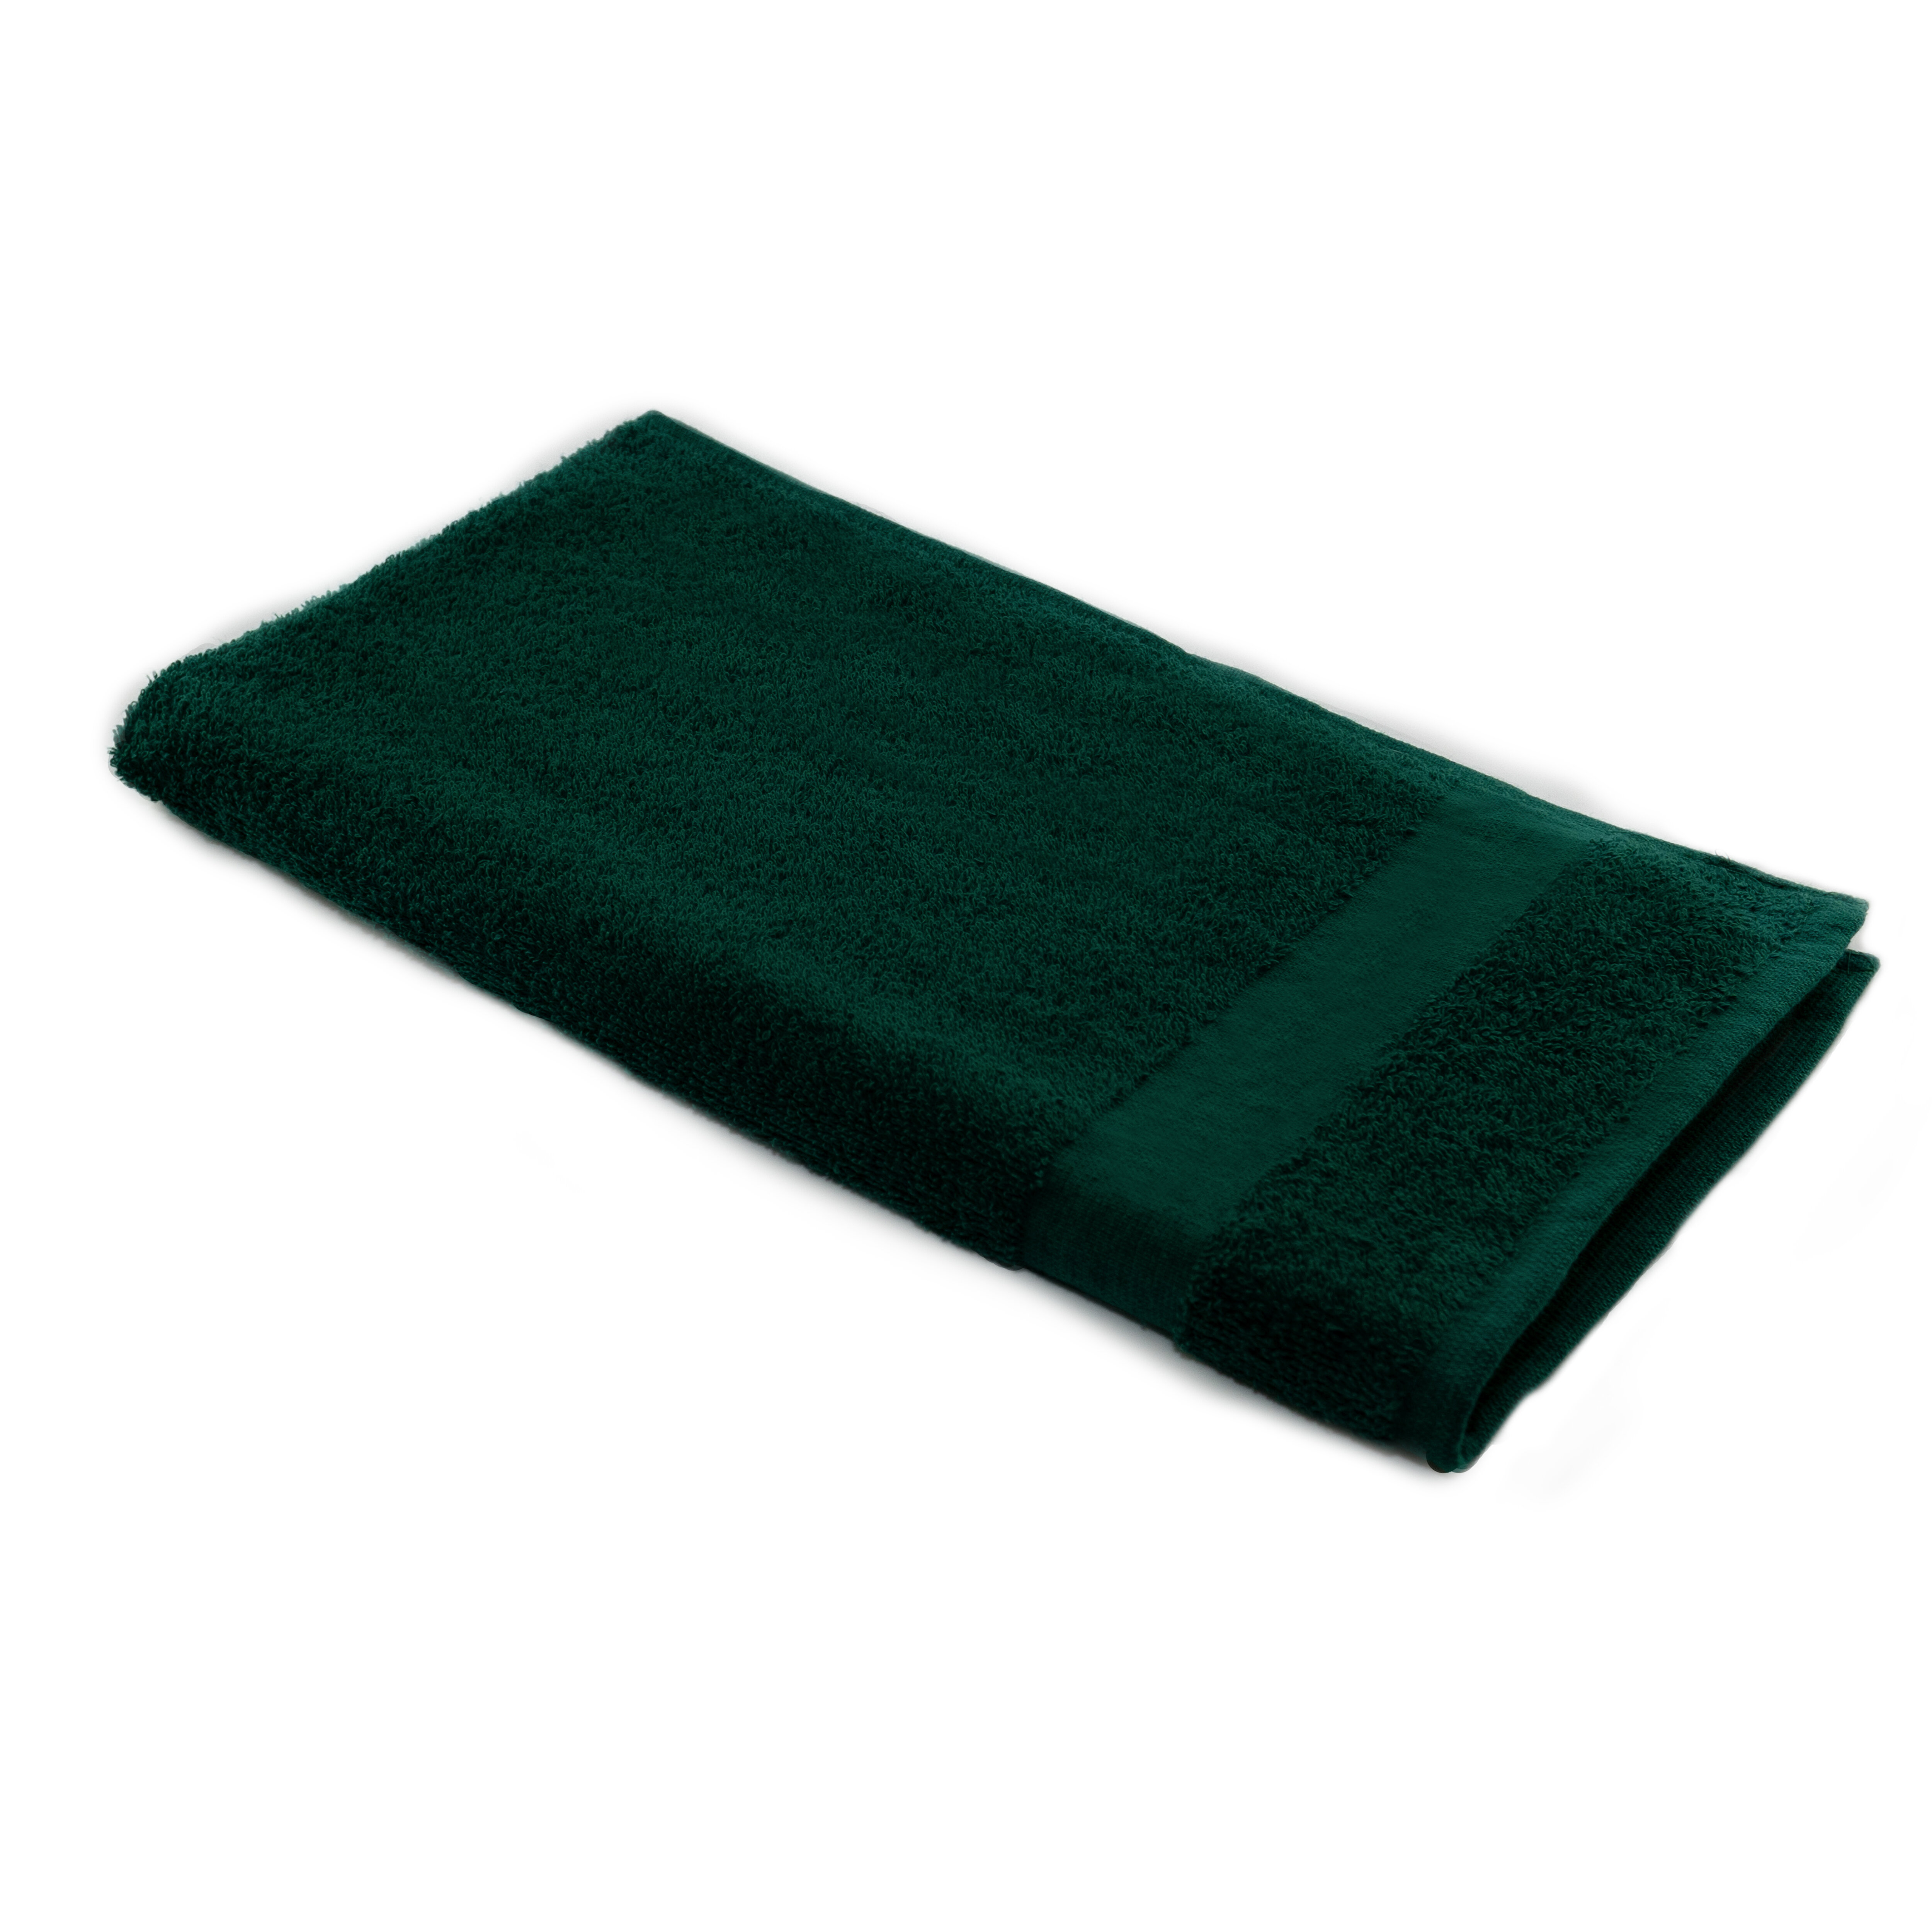 Bargains by Green - Charisma Bath Towel - 100% Hygro Cotton, 30 x